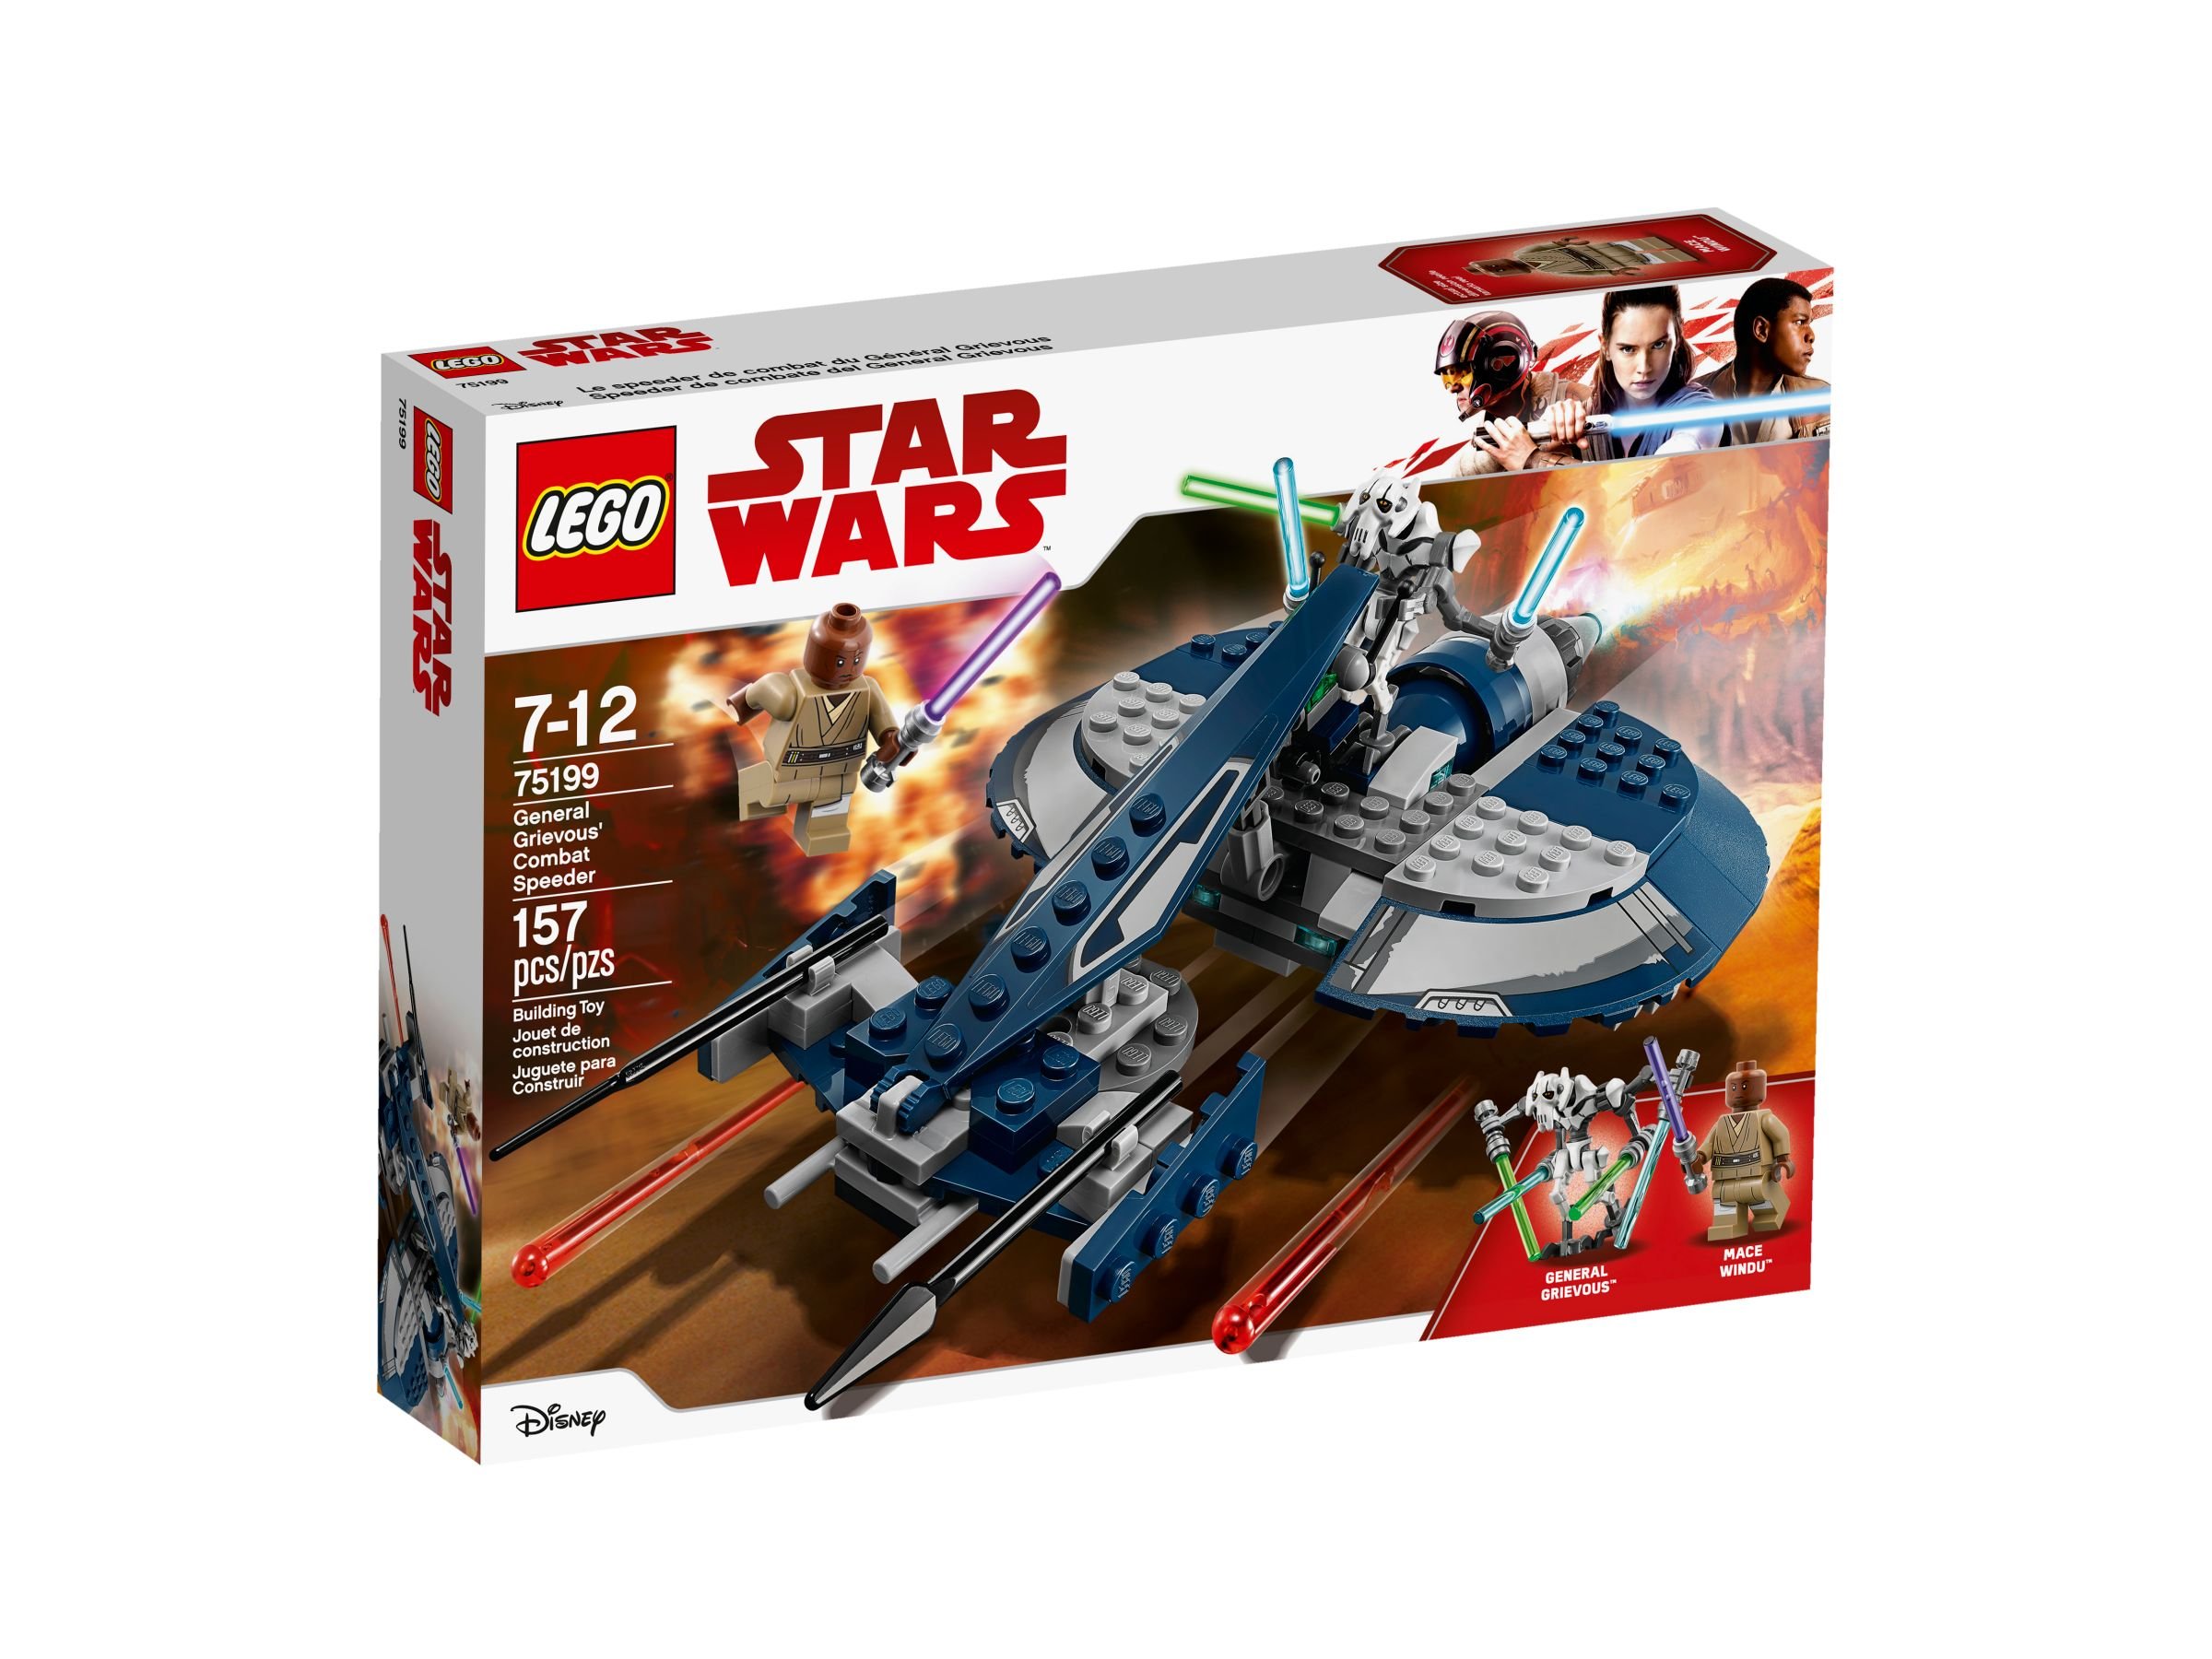 LEGO Star Wars 75199 General Grievous Combat Speeder LEGO_75199_alt1.jpg